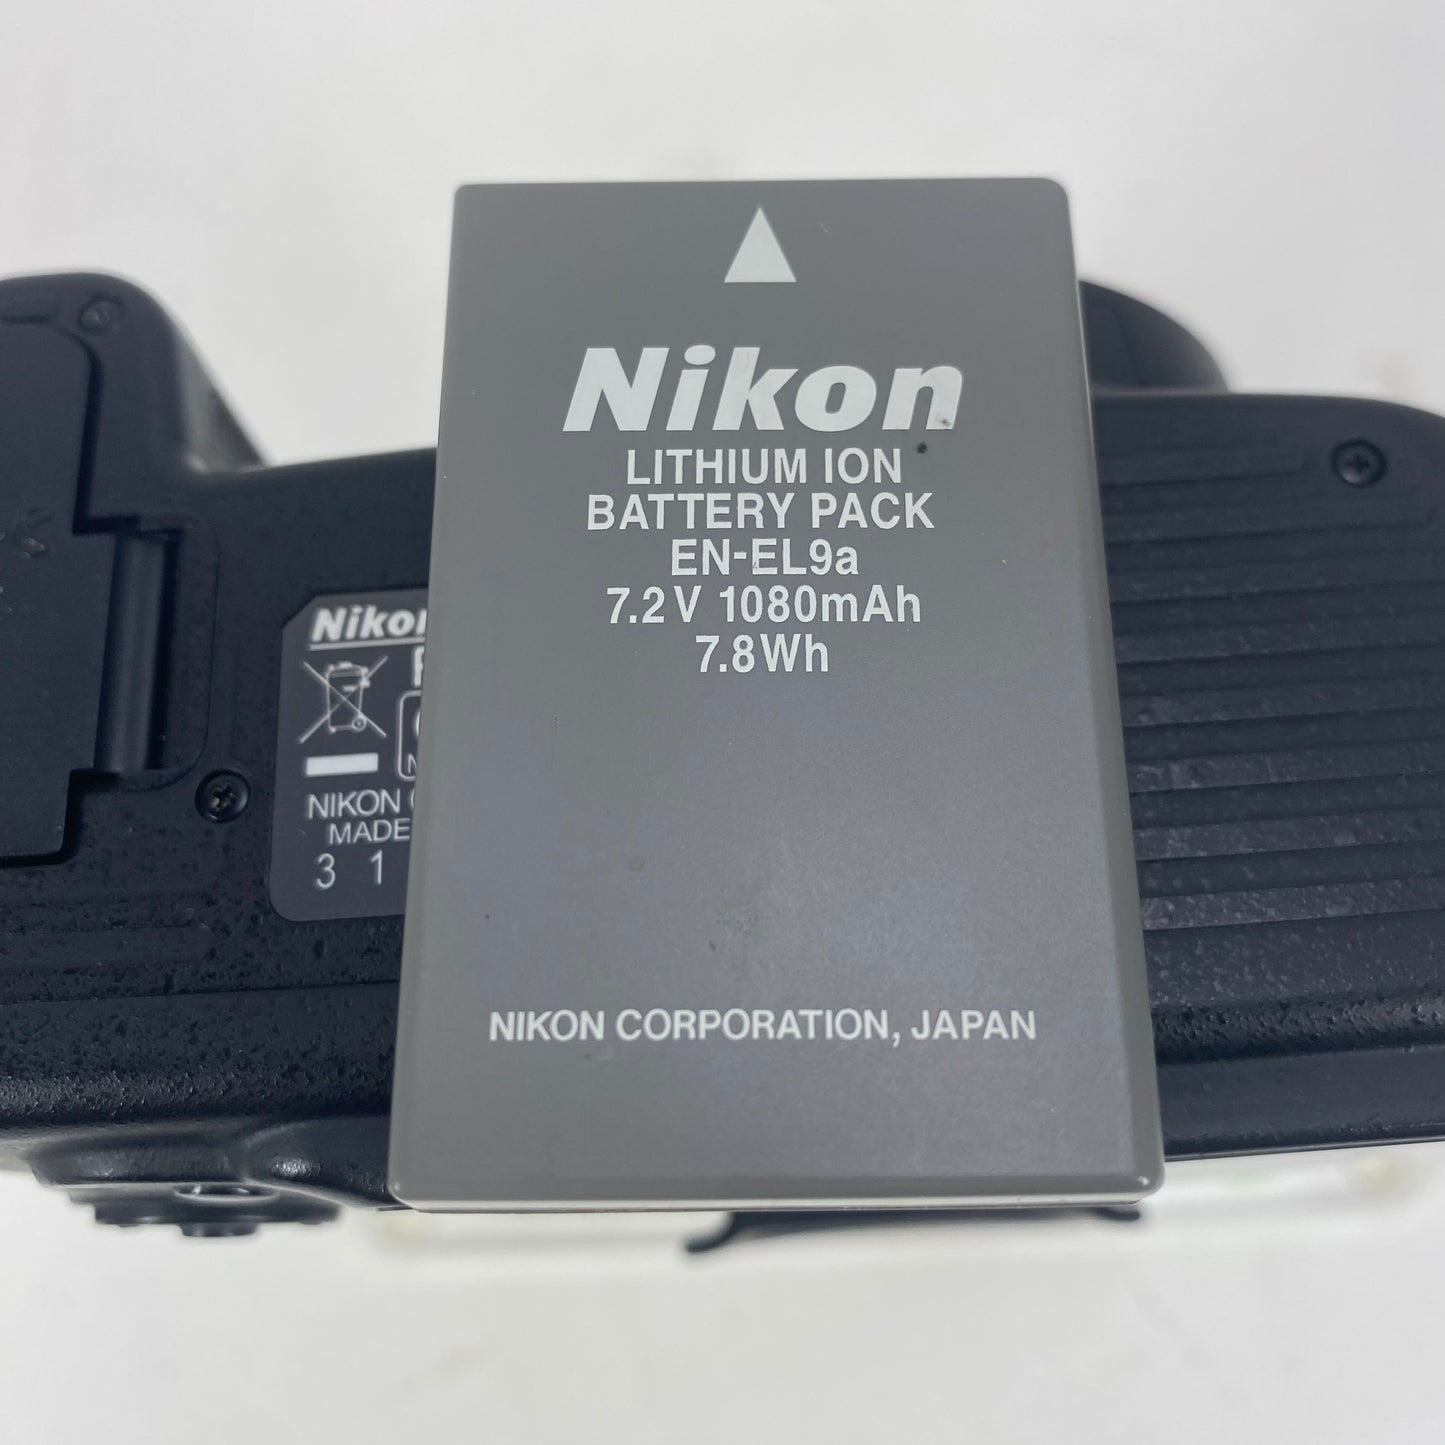 Nikon D3000 10.2MP Digital SLR DSLR Camera + Bag & Lens Bundle